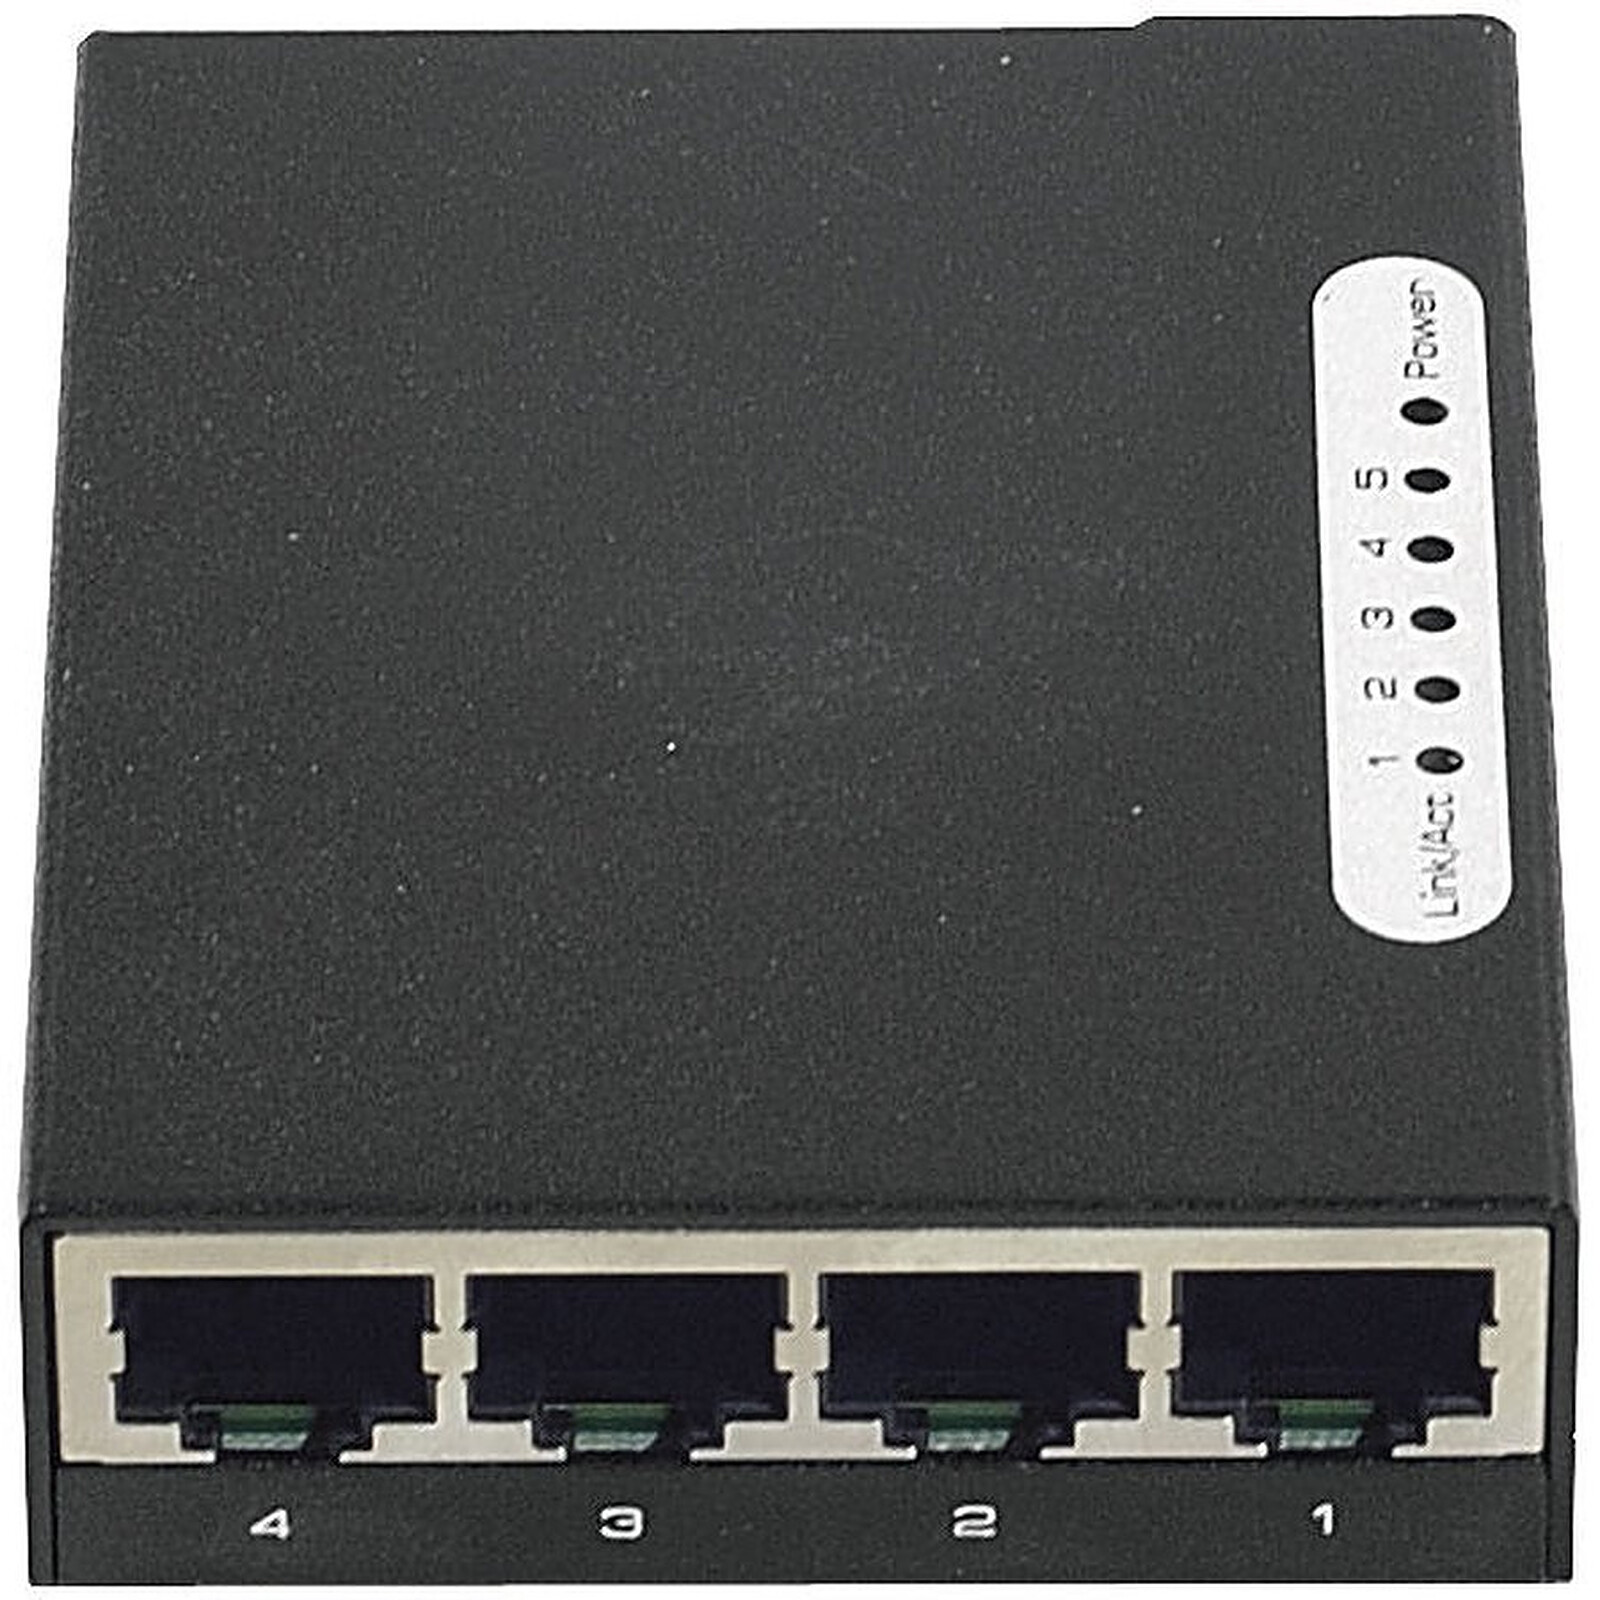 5 Ports Mini Networking Switch, (USB Powered)